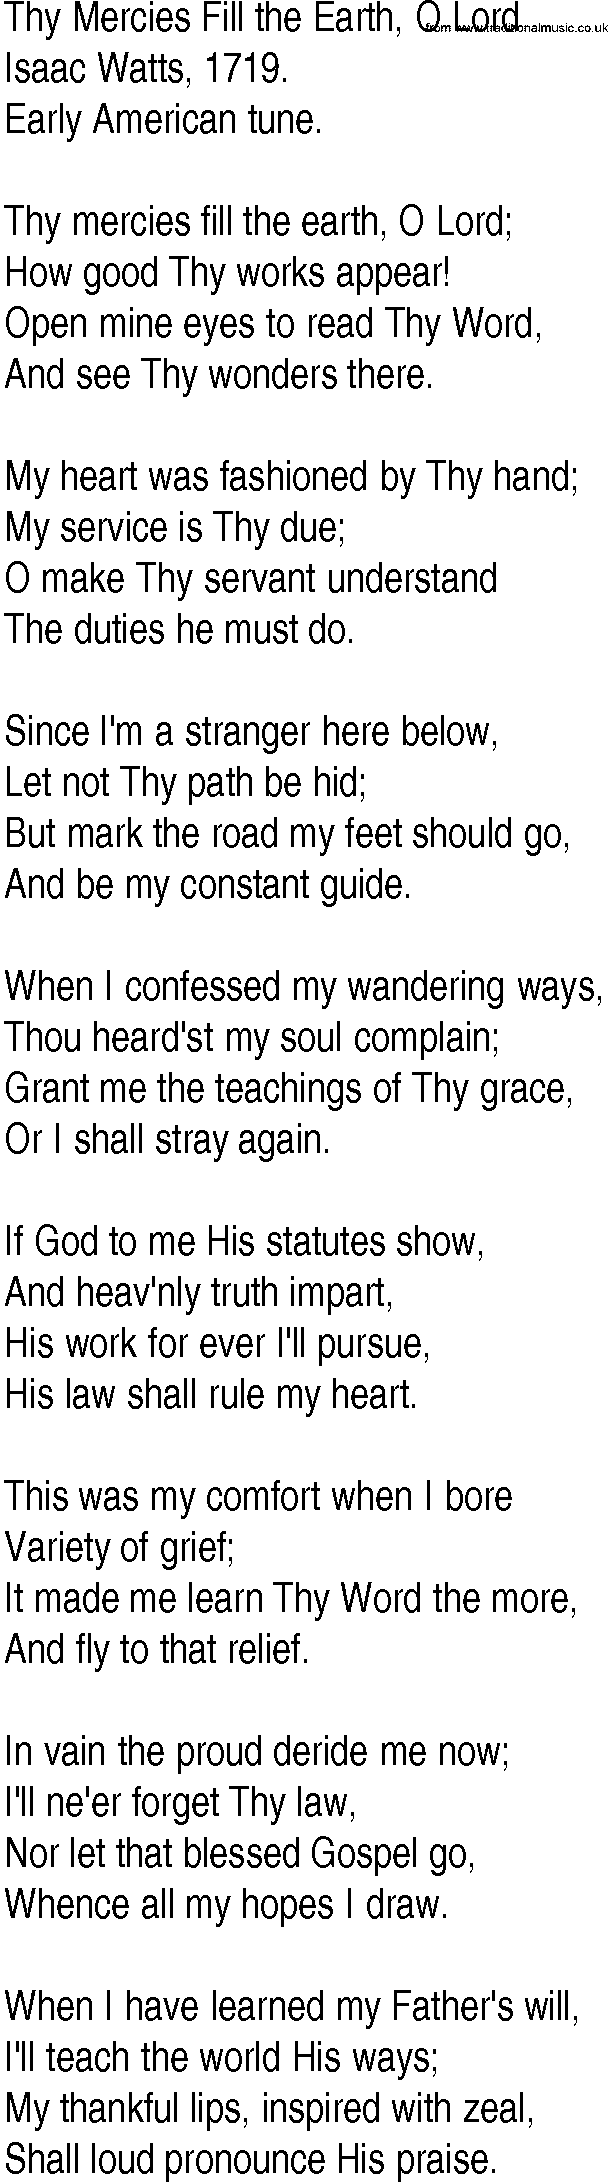 Hymn and Gospel Song: Thy Mercies Fill the Earth, O Lord by Isaac Watts lyrics